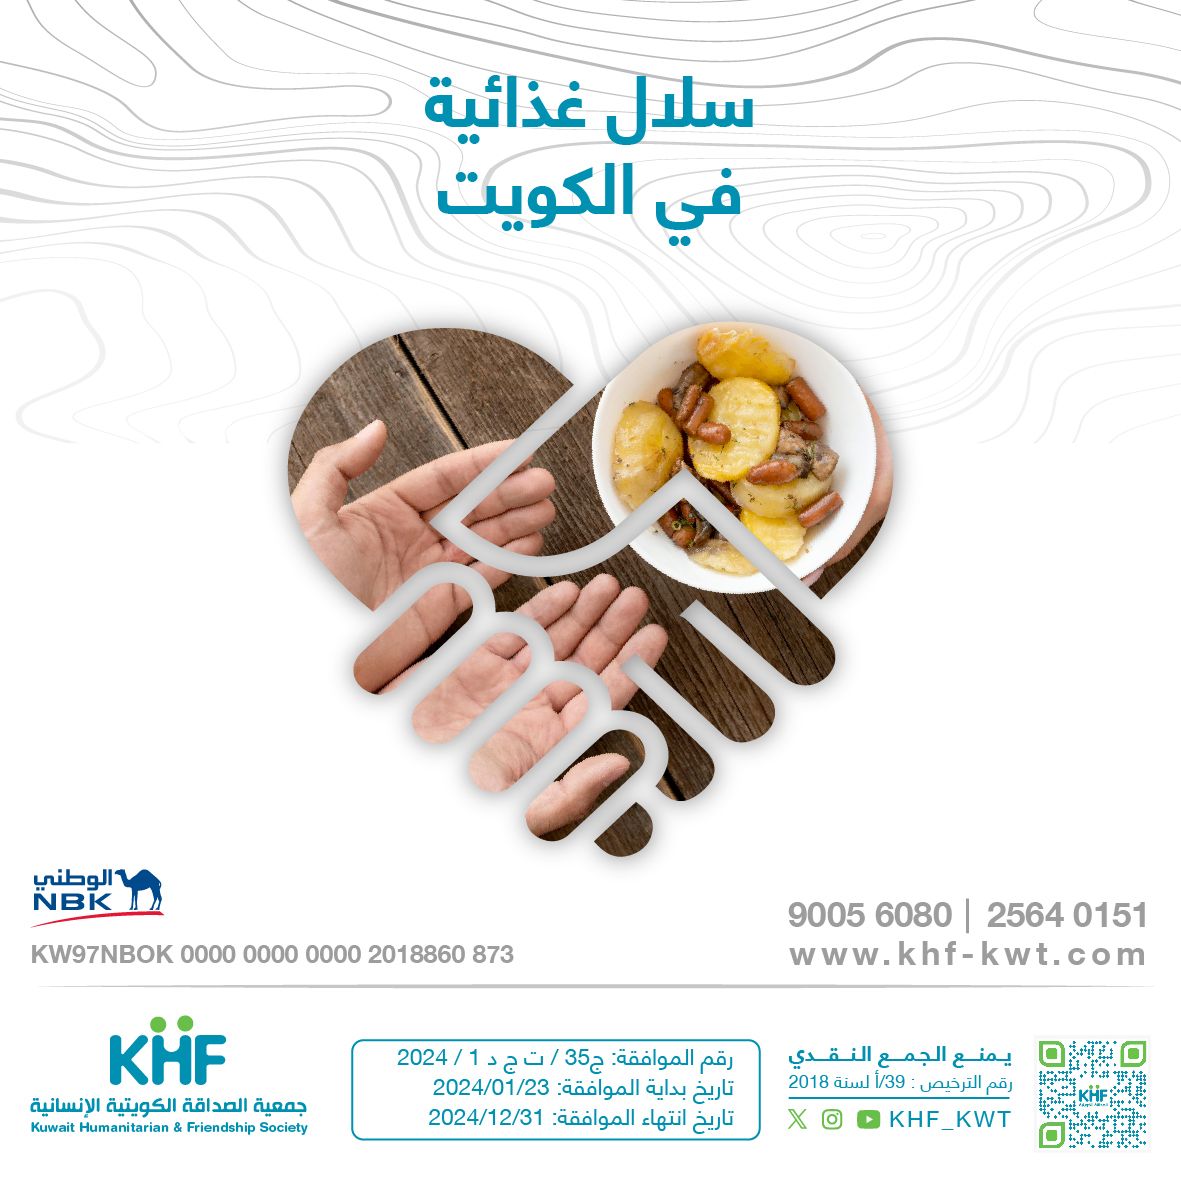 Food baskets/Food aid in Kuwait